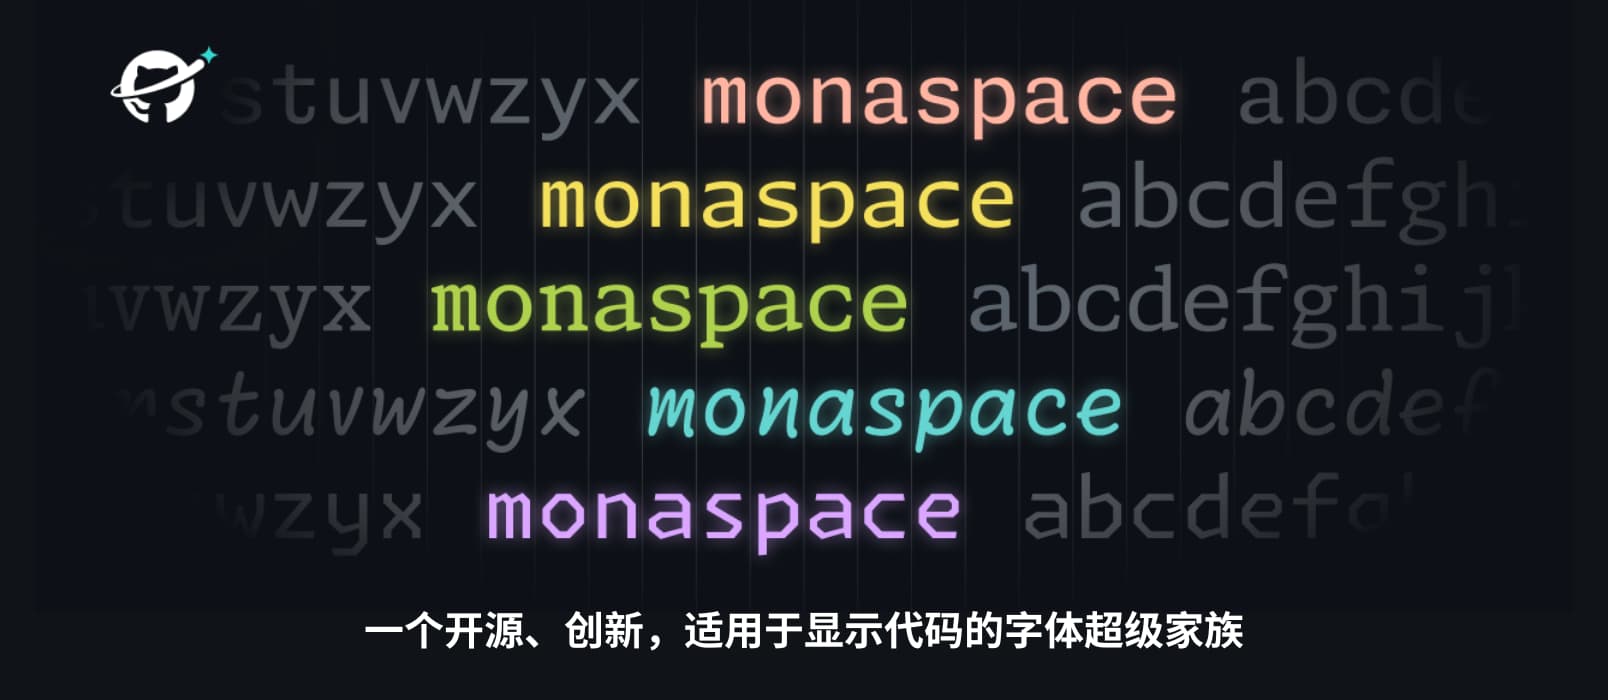 Github 发布了适合显示代码的开源字体超级家族 Monaspace，支持编程连字，其 Texture Healing 特性可让 w、m、i、l 读起来更舒服